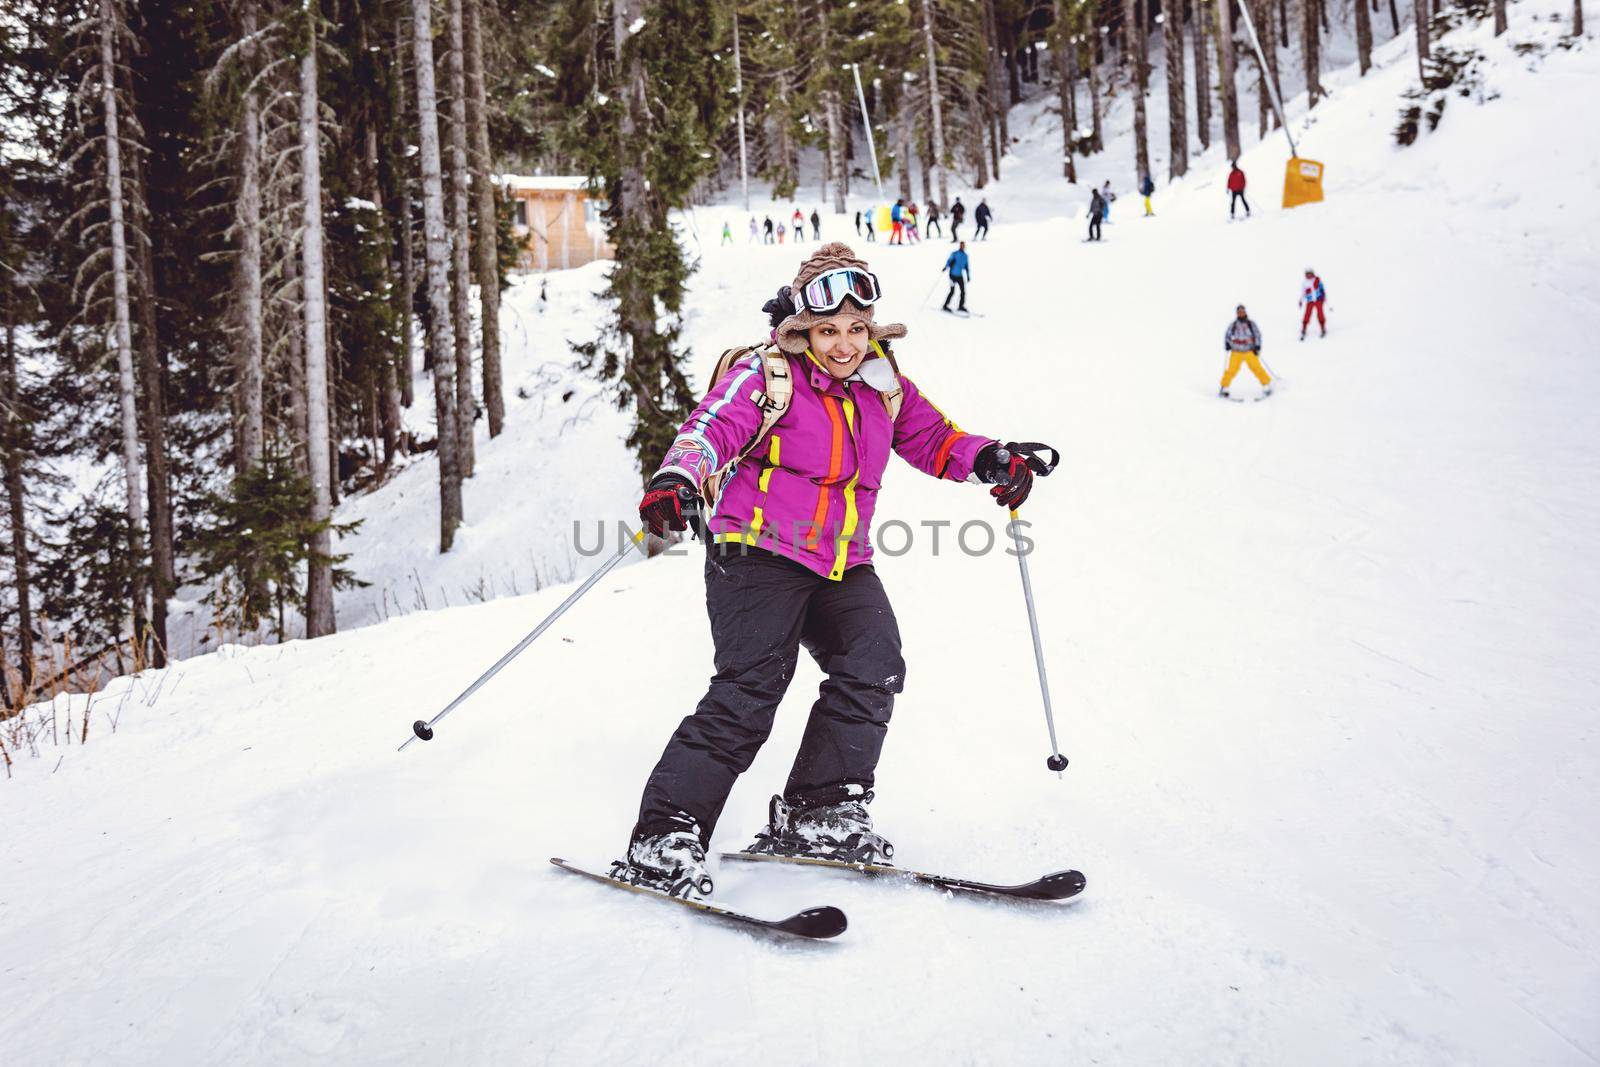  I Learned To Ski! by MilanMarkovic78